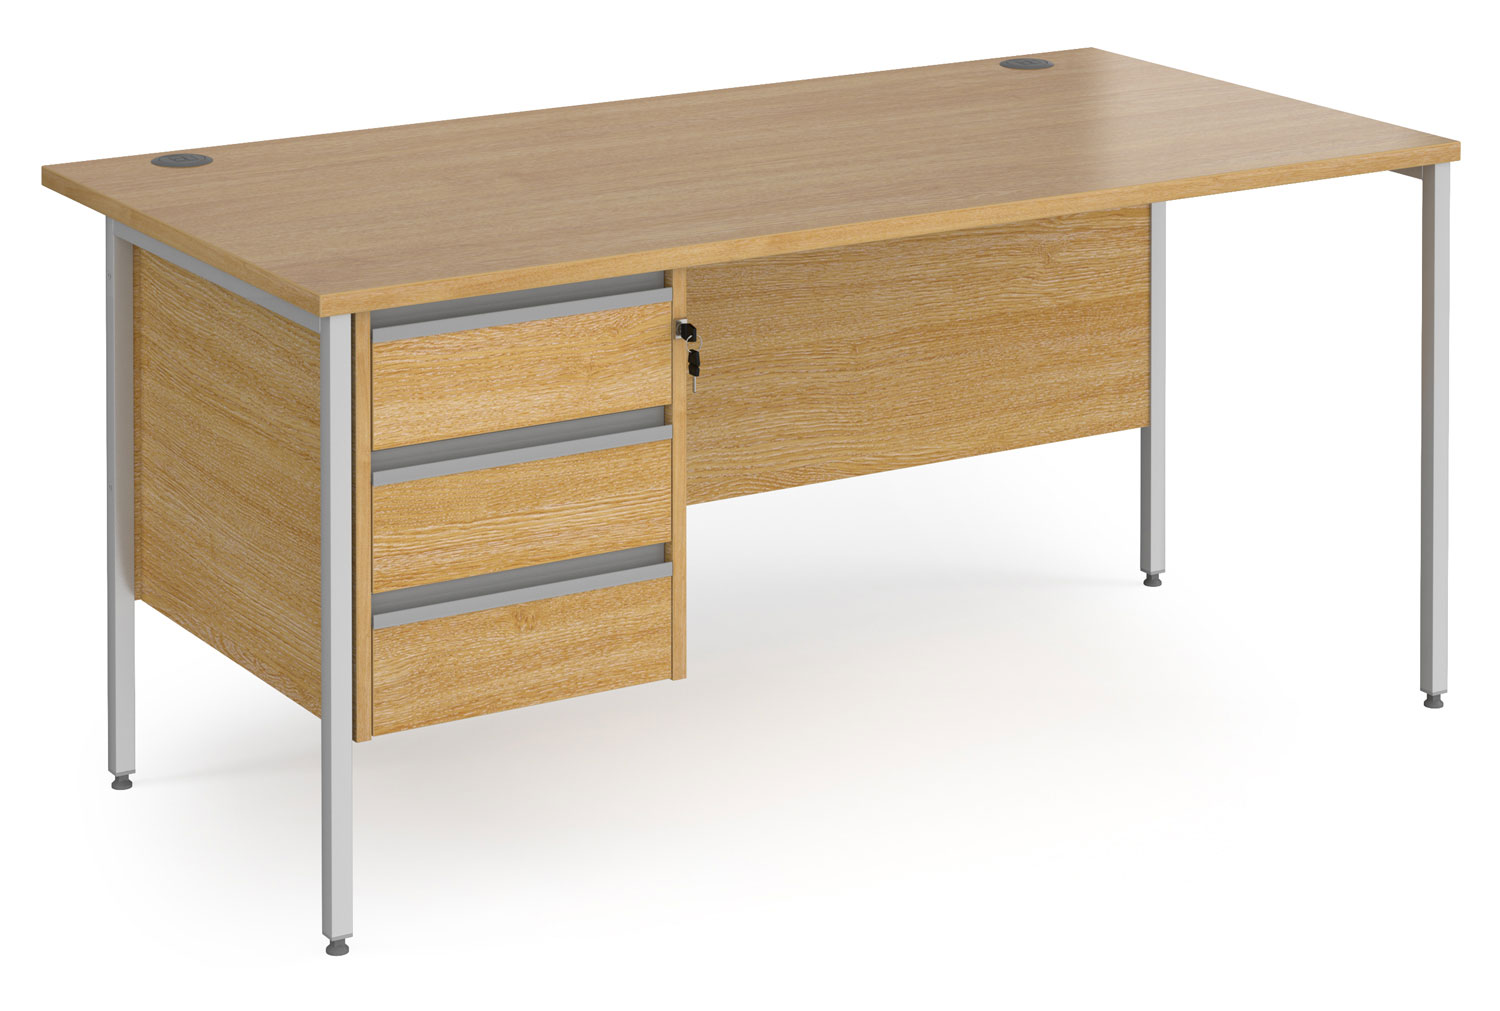 Value Line Classic+ Rectangular H-Leg Office Desk 3 Drawers (Silver Leg), 160wx80dx73h (cm), Oak, Express Delivery